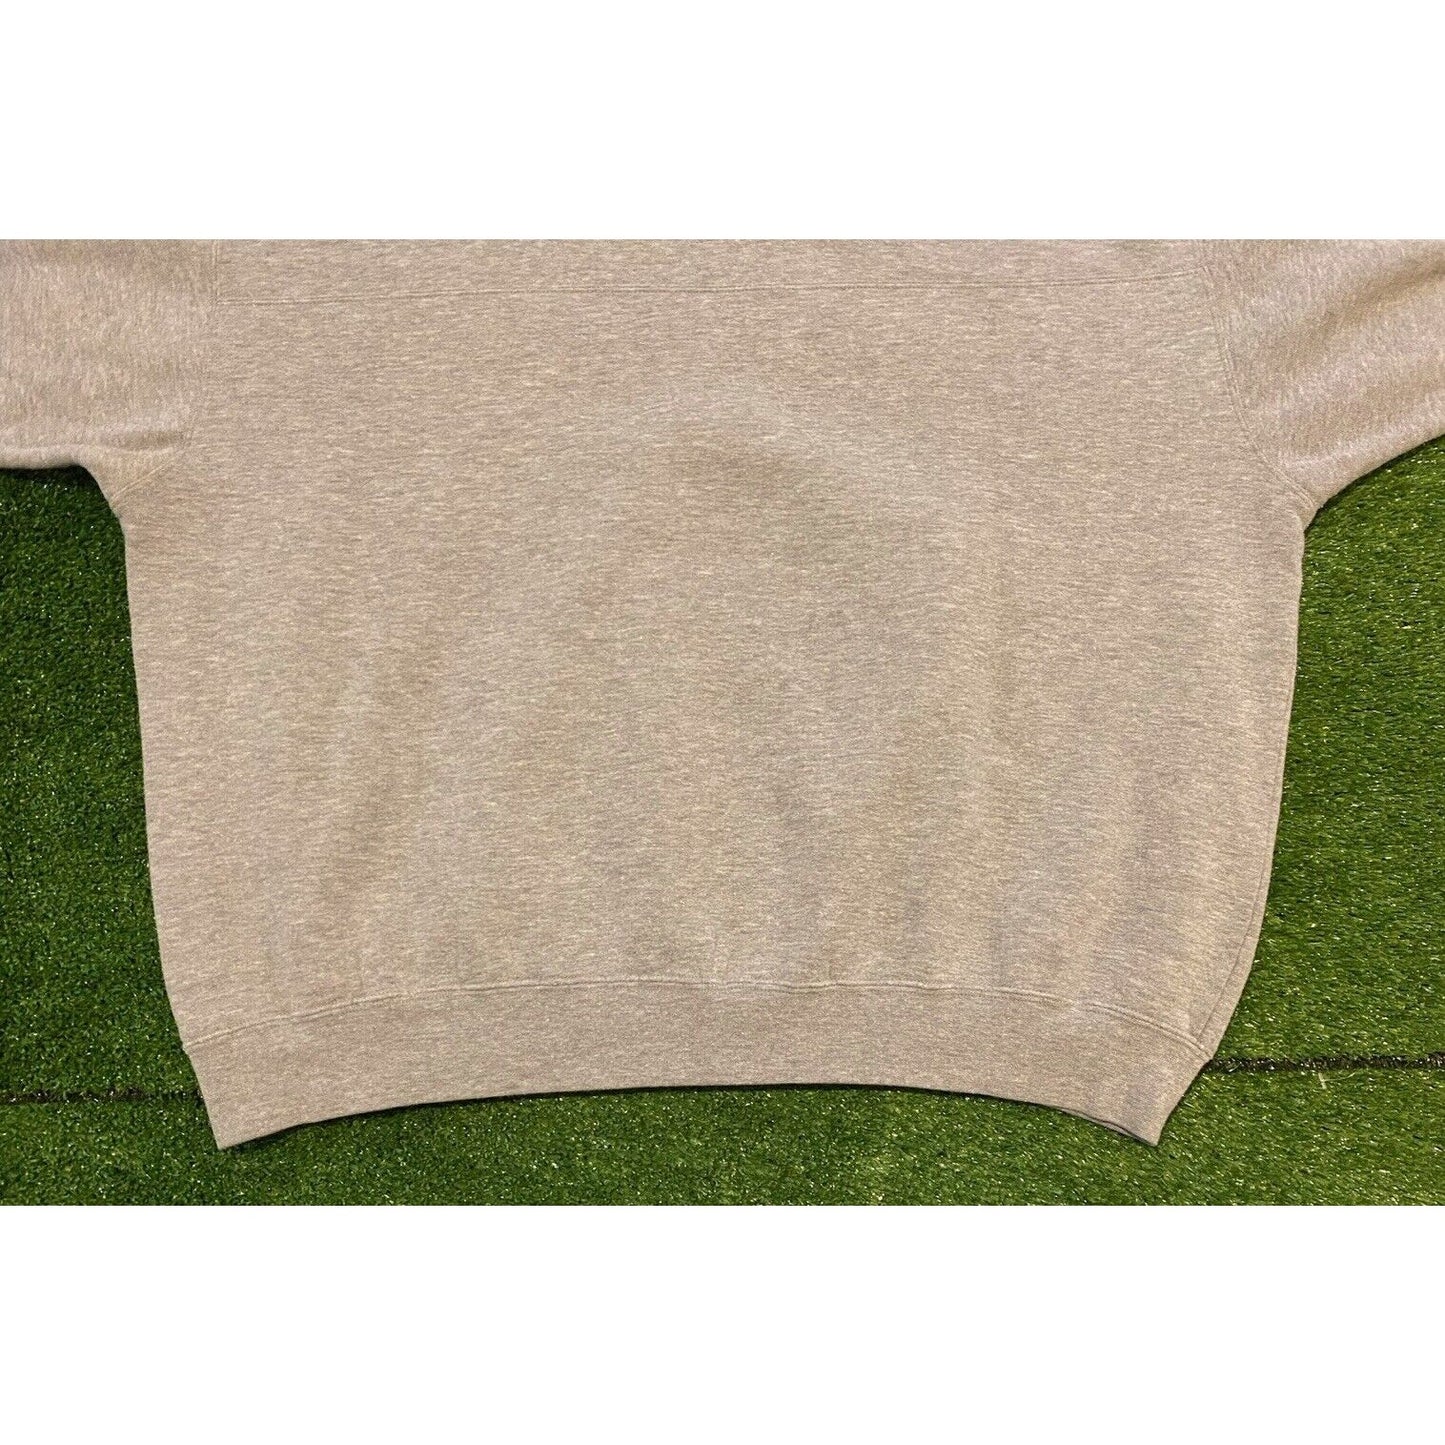 Womens Vintage Ohio State sweatshirt extra large gray football Lee Sport Y2K OSU